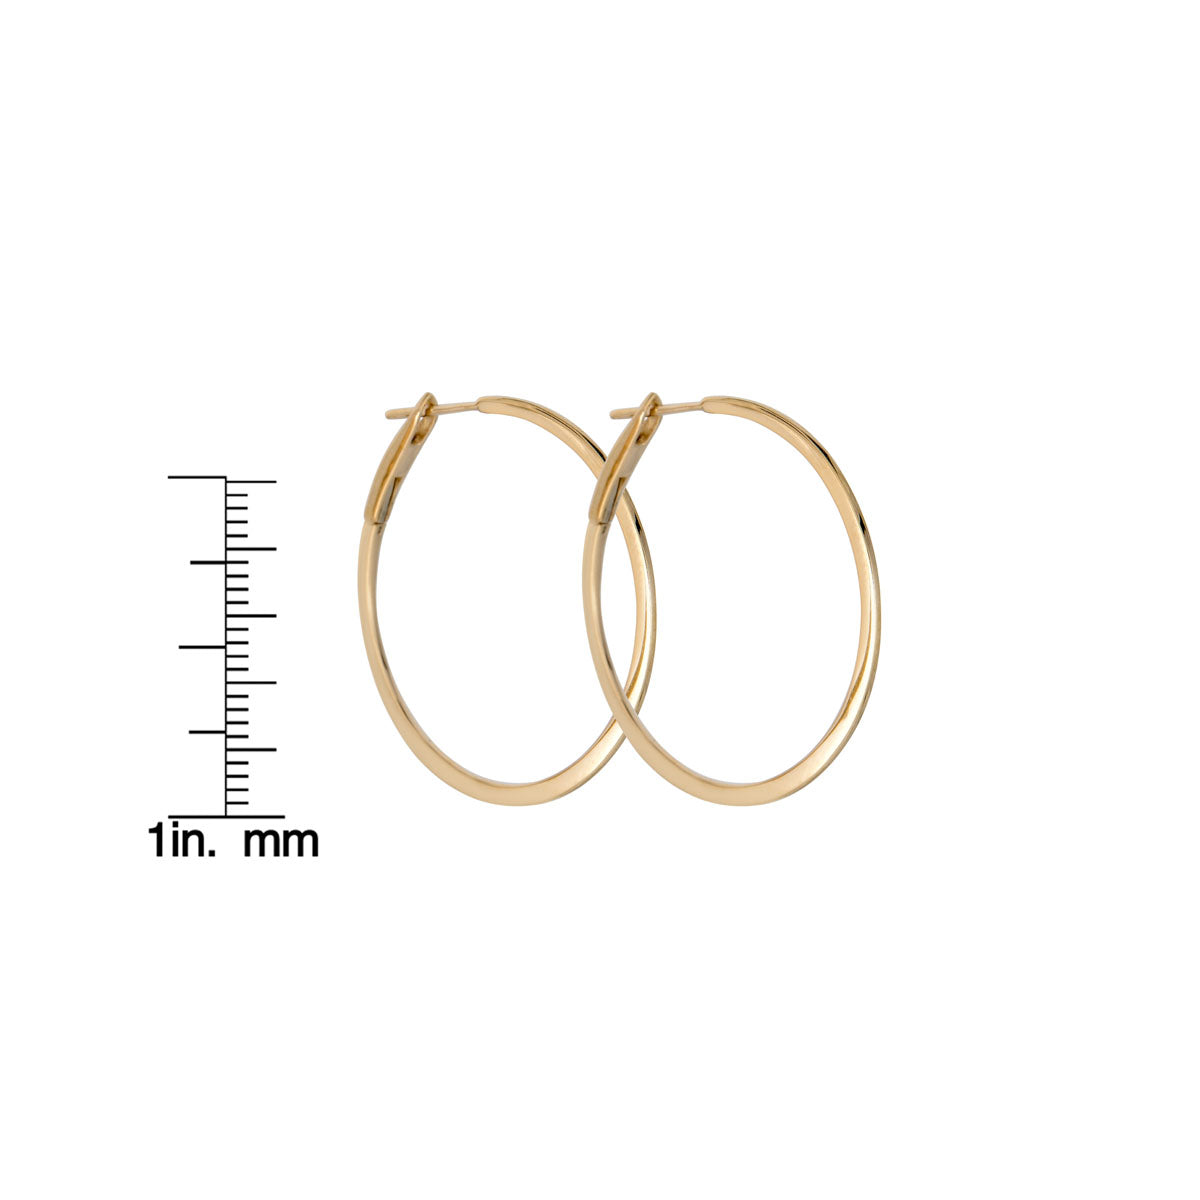 1 inch quarter gold skinny gold hoop earrings side view